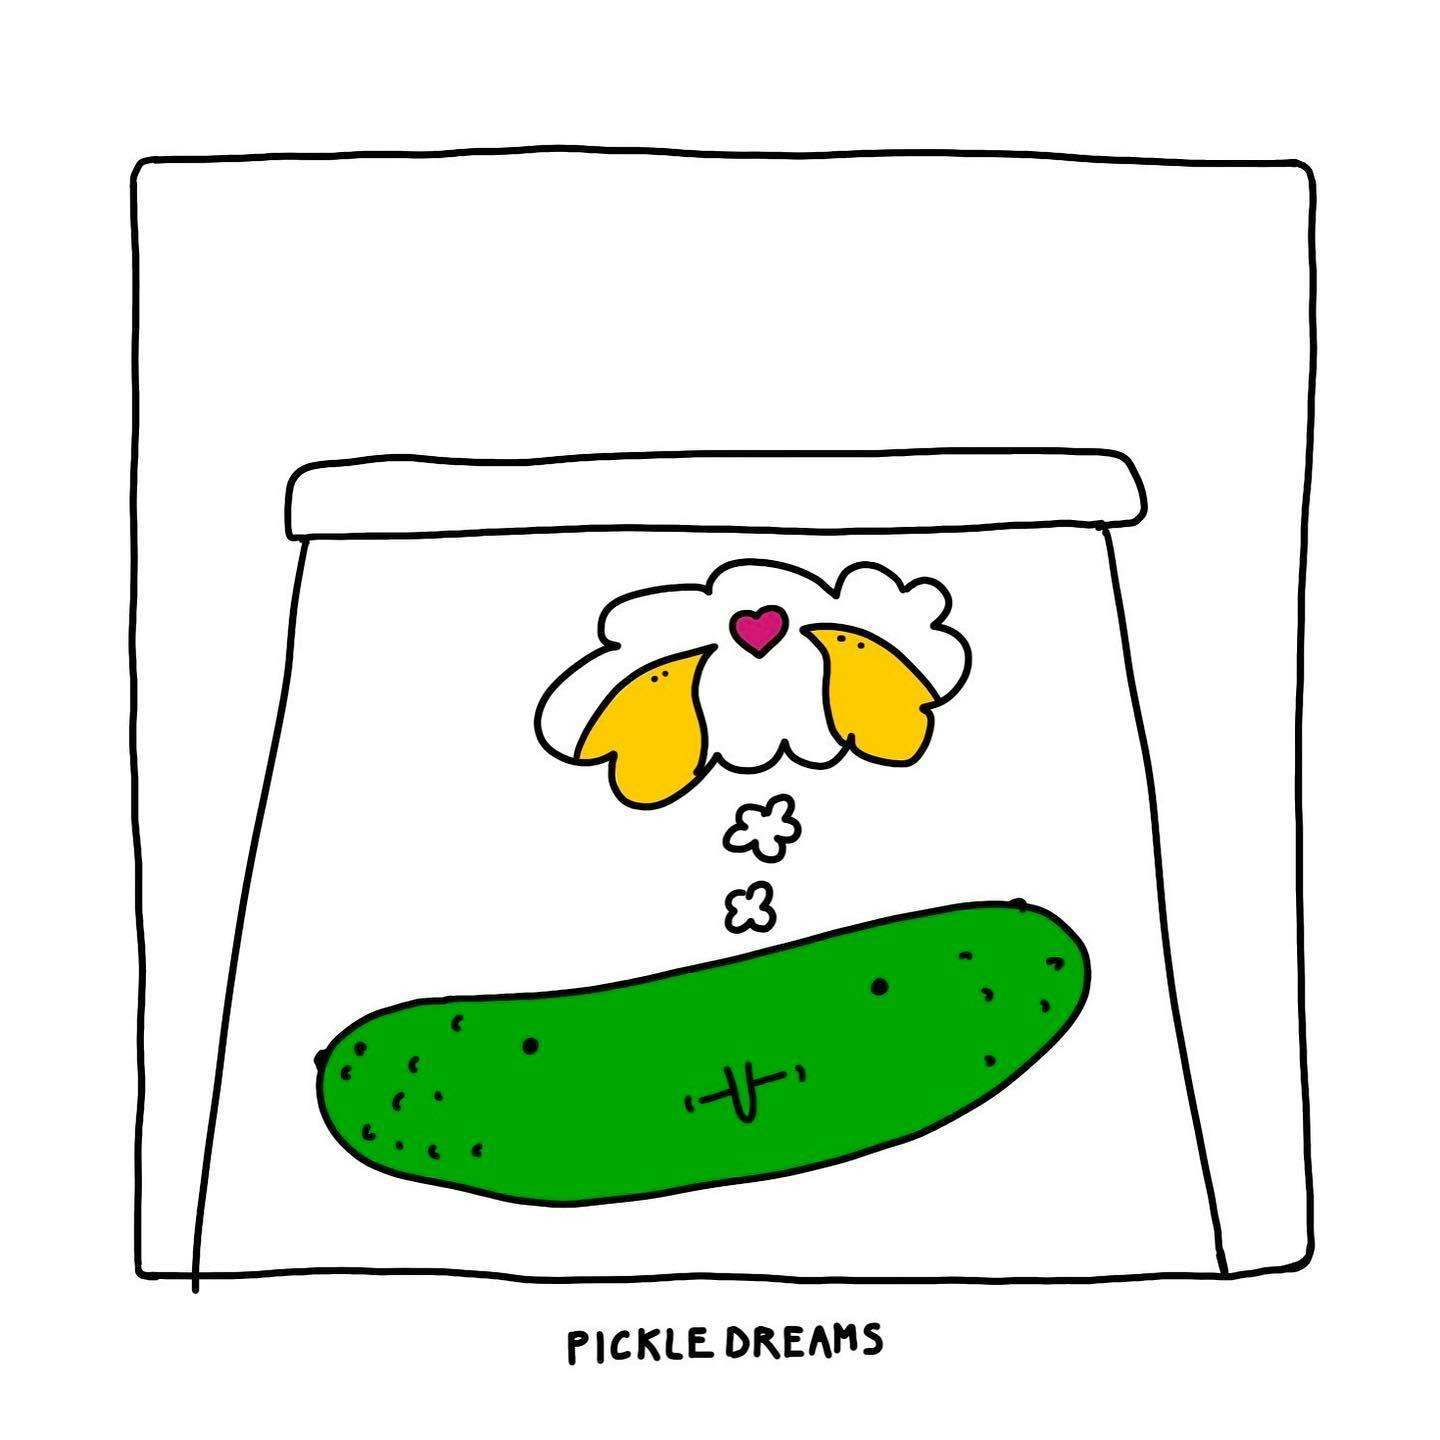 Pickle dreams